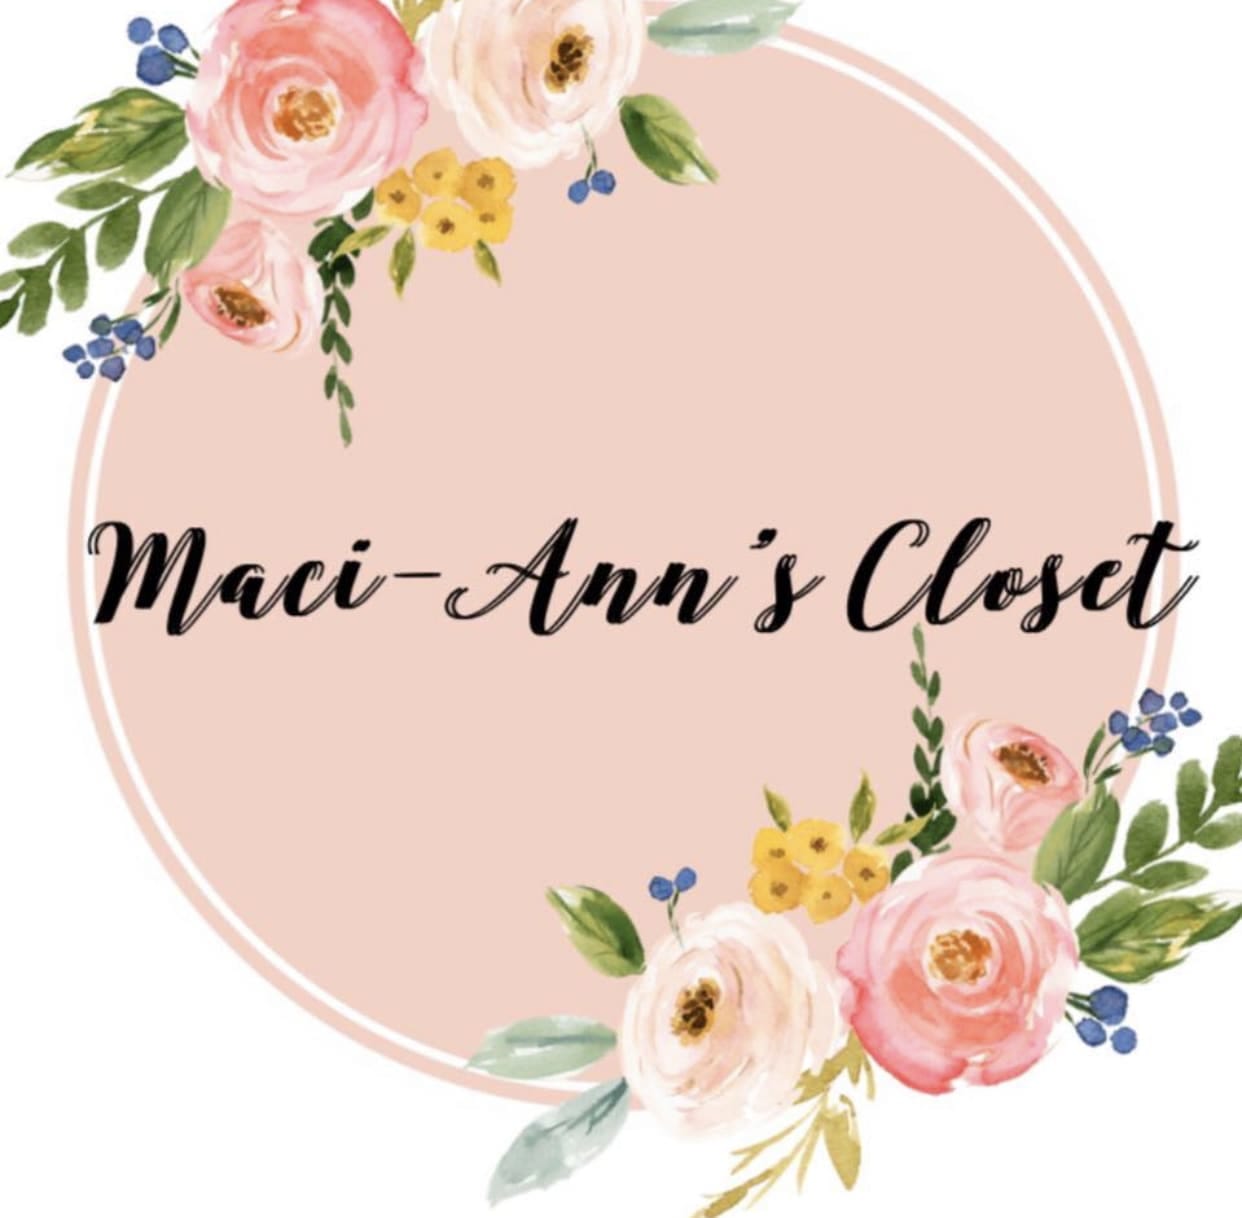 Maci-Ann’s Closet